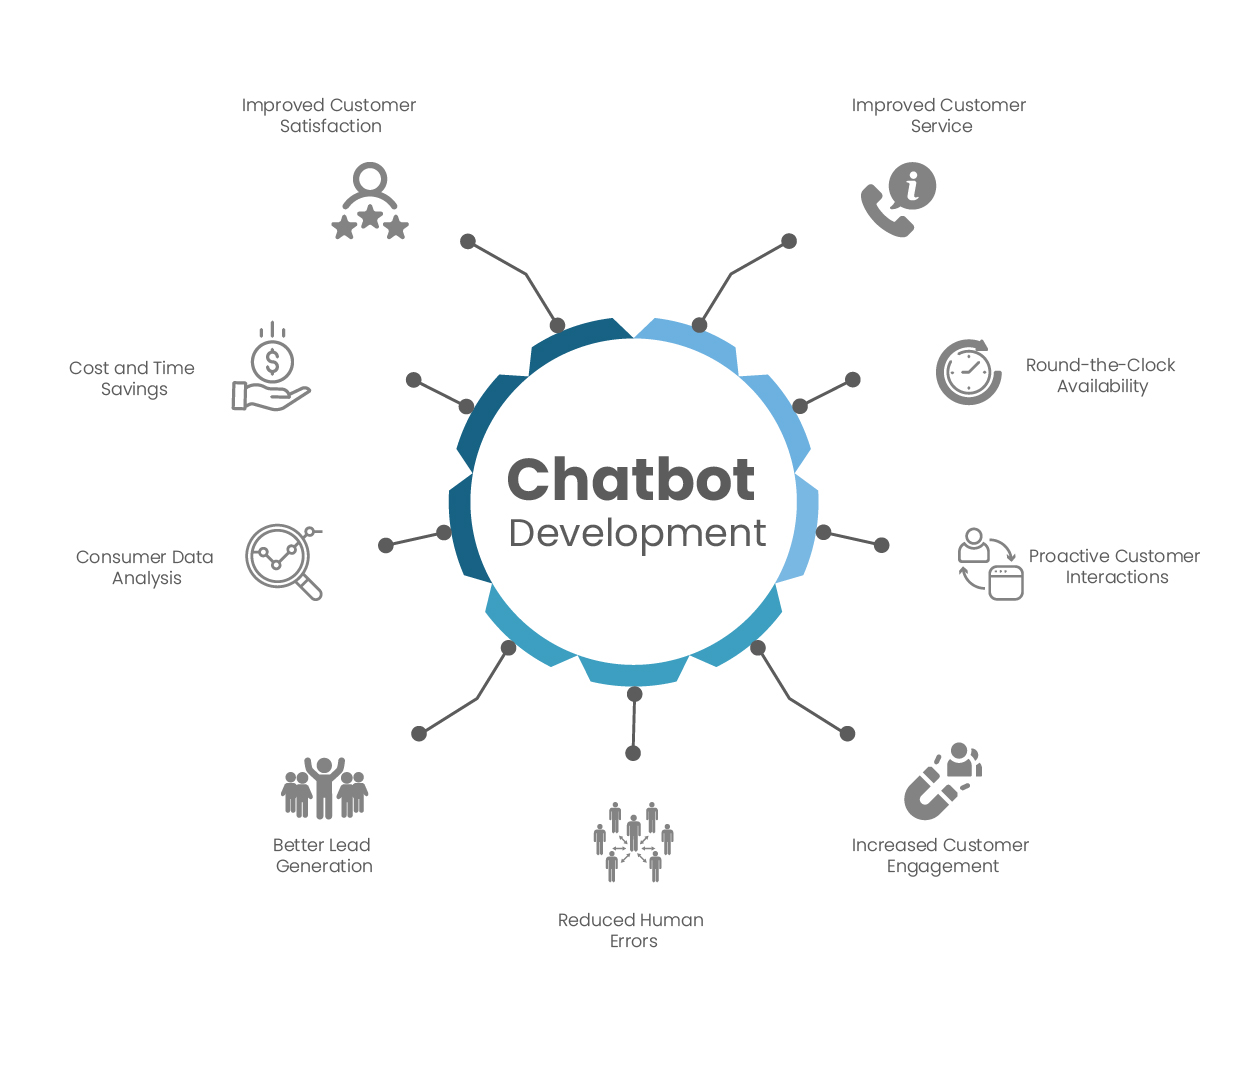 Chatbot Development Benefits